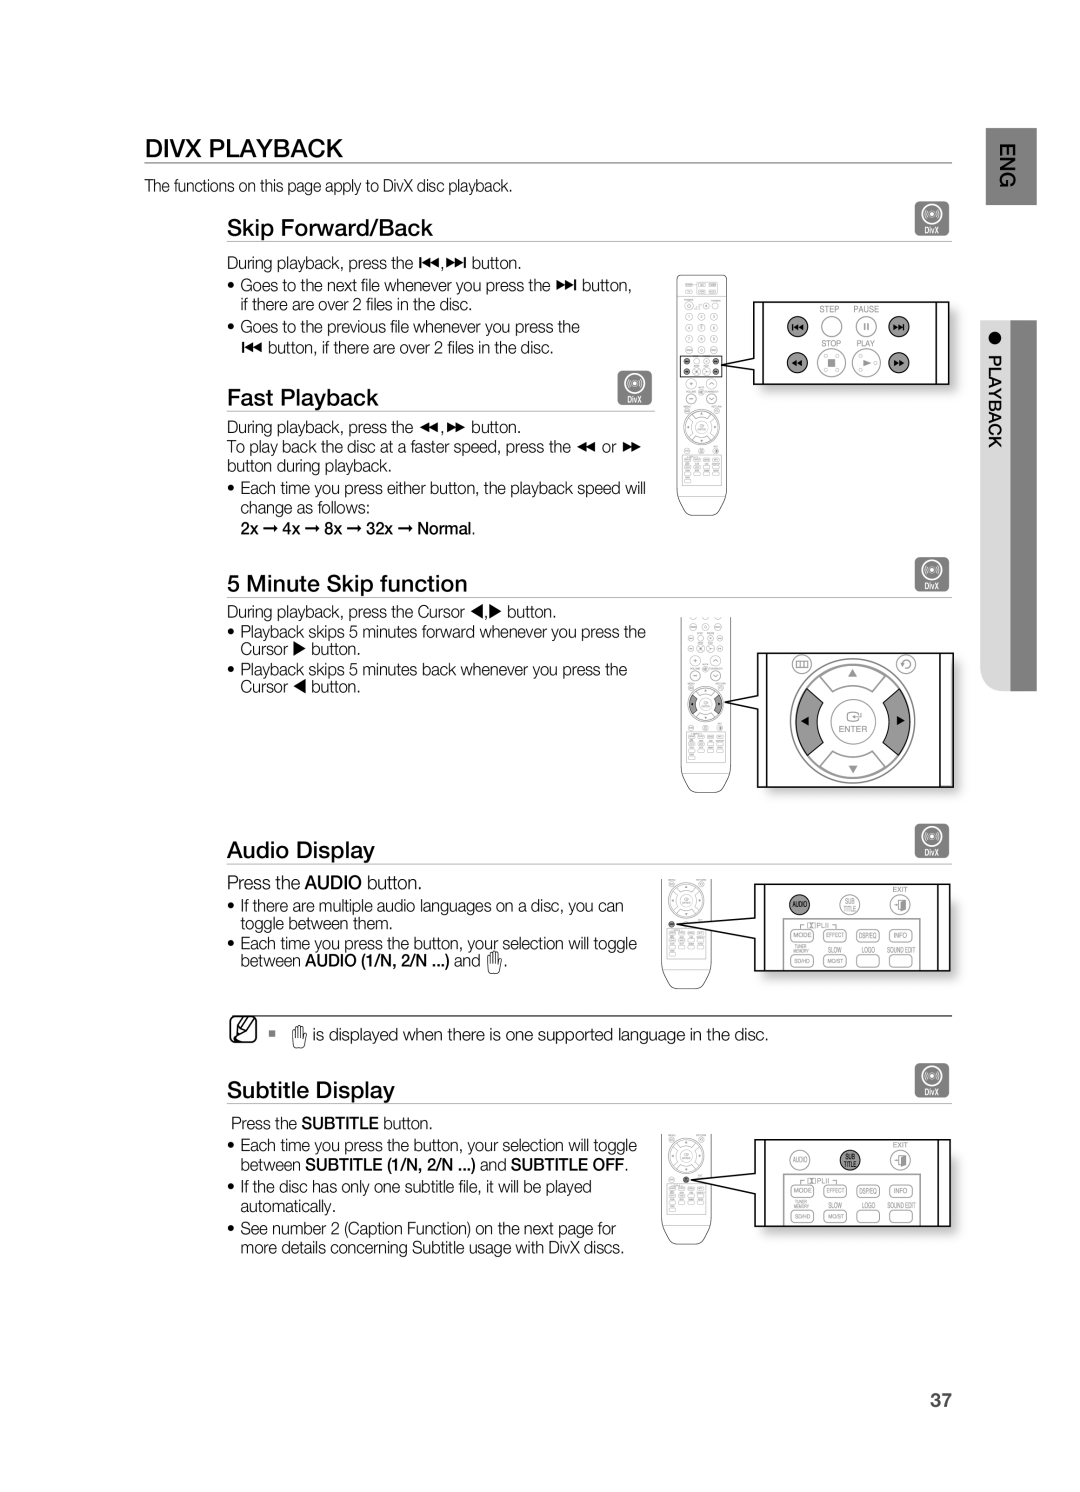 Samsung HT-TZ312 manual D D D, DiVX PLayBaCK, Skip forward/Back, fast Playback, minute Skip function, audio Display 